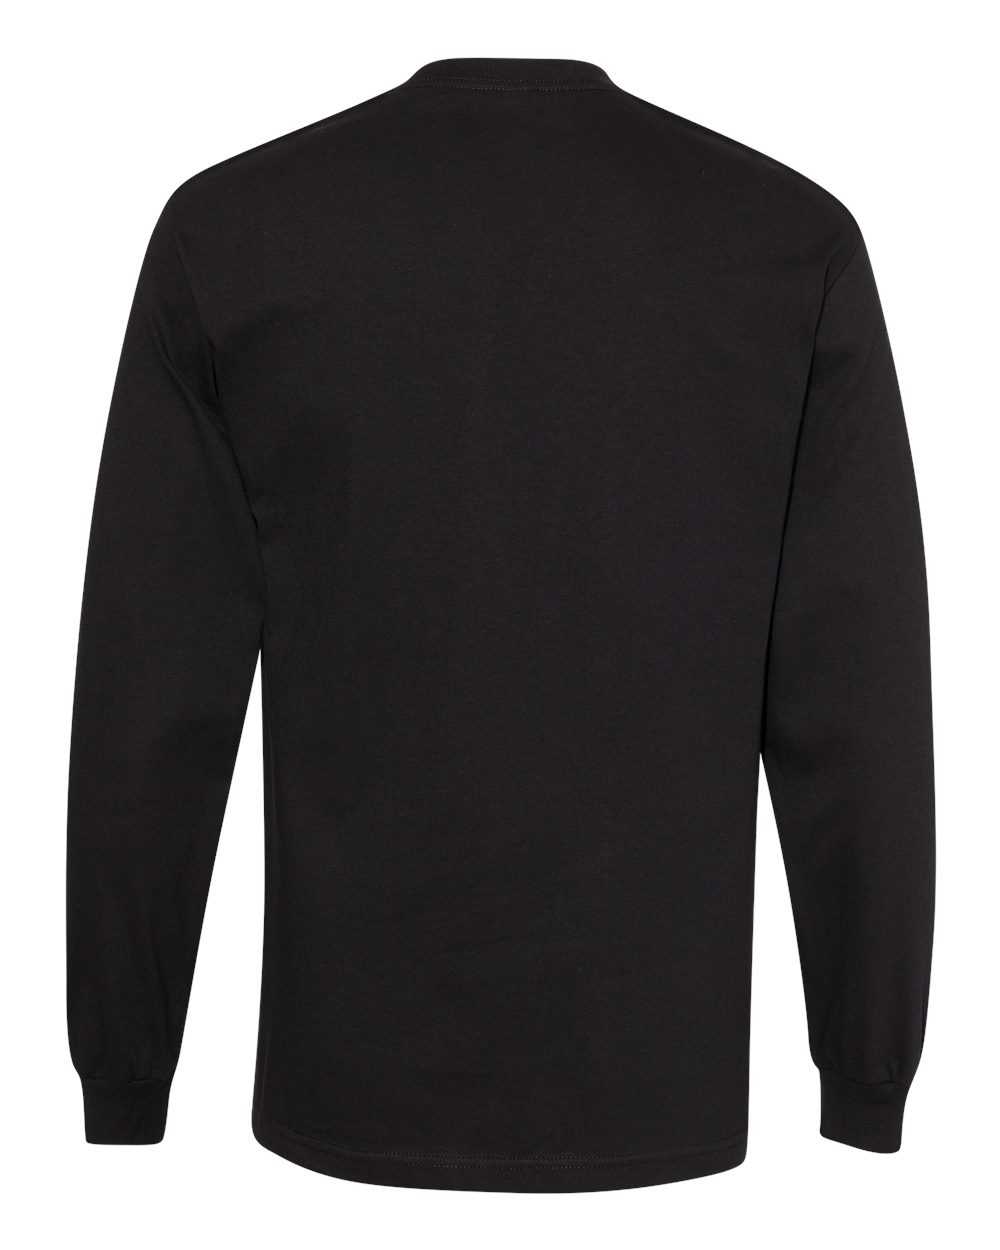 American Apparel 1304 Unisex Heavyweight Cotton Long Sleeve T-Shirt - Black - HIT a Double